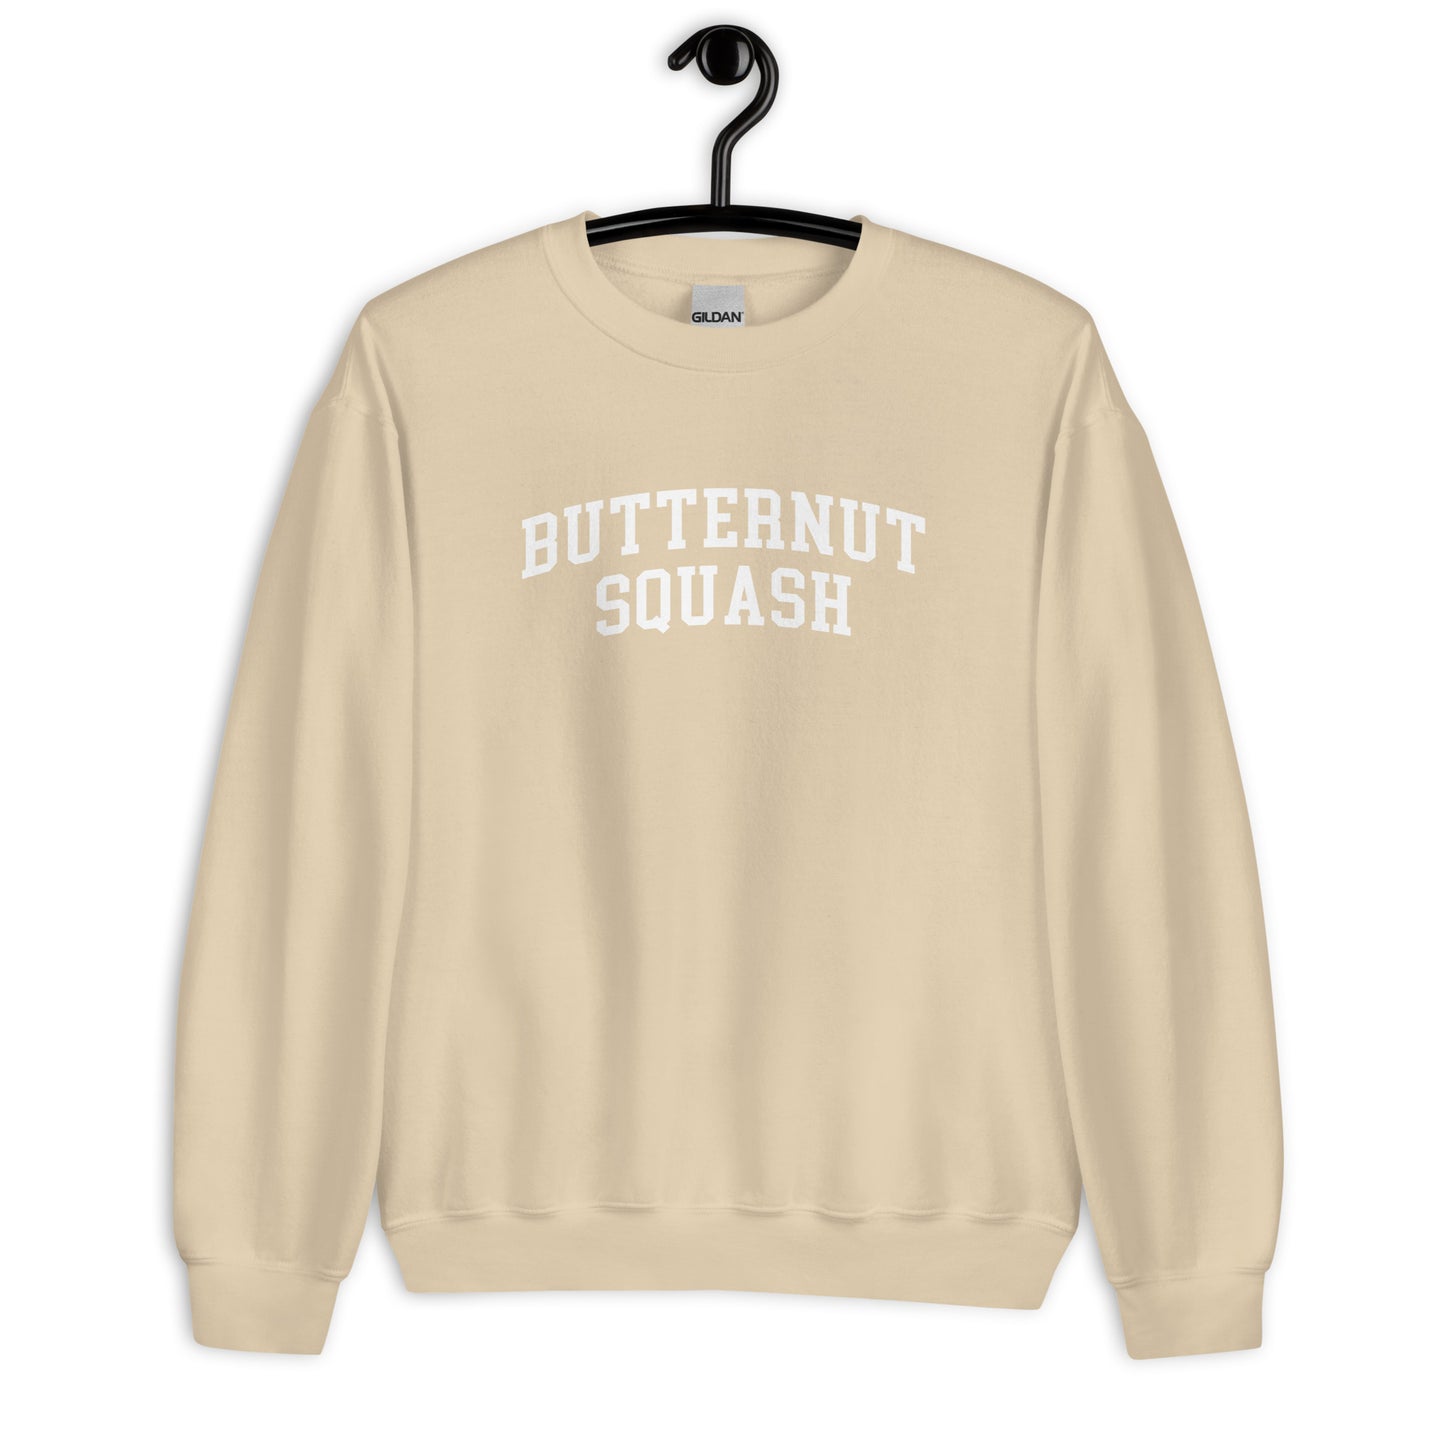 Butternut Squash Sweatshirt - Arched Font